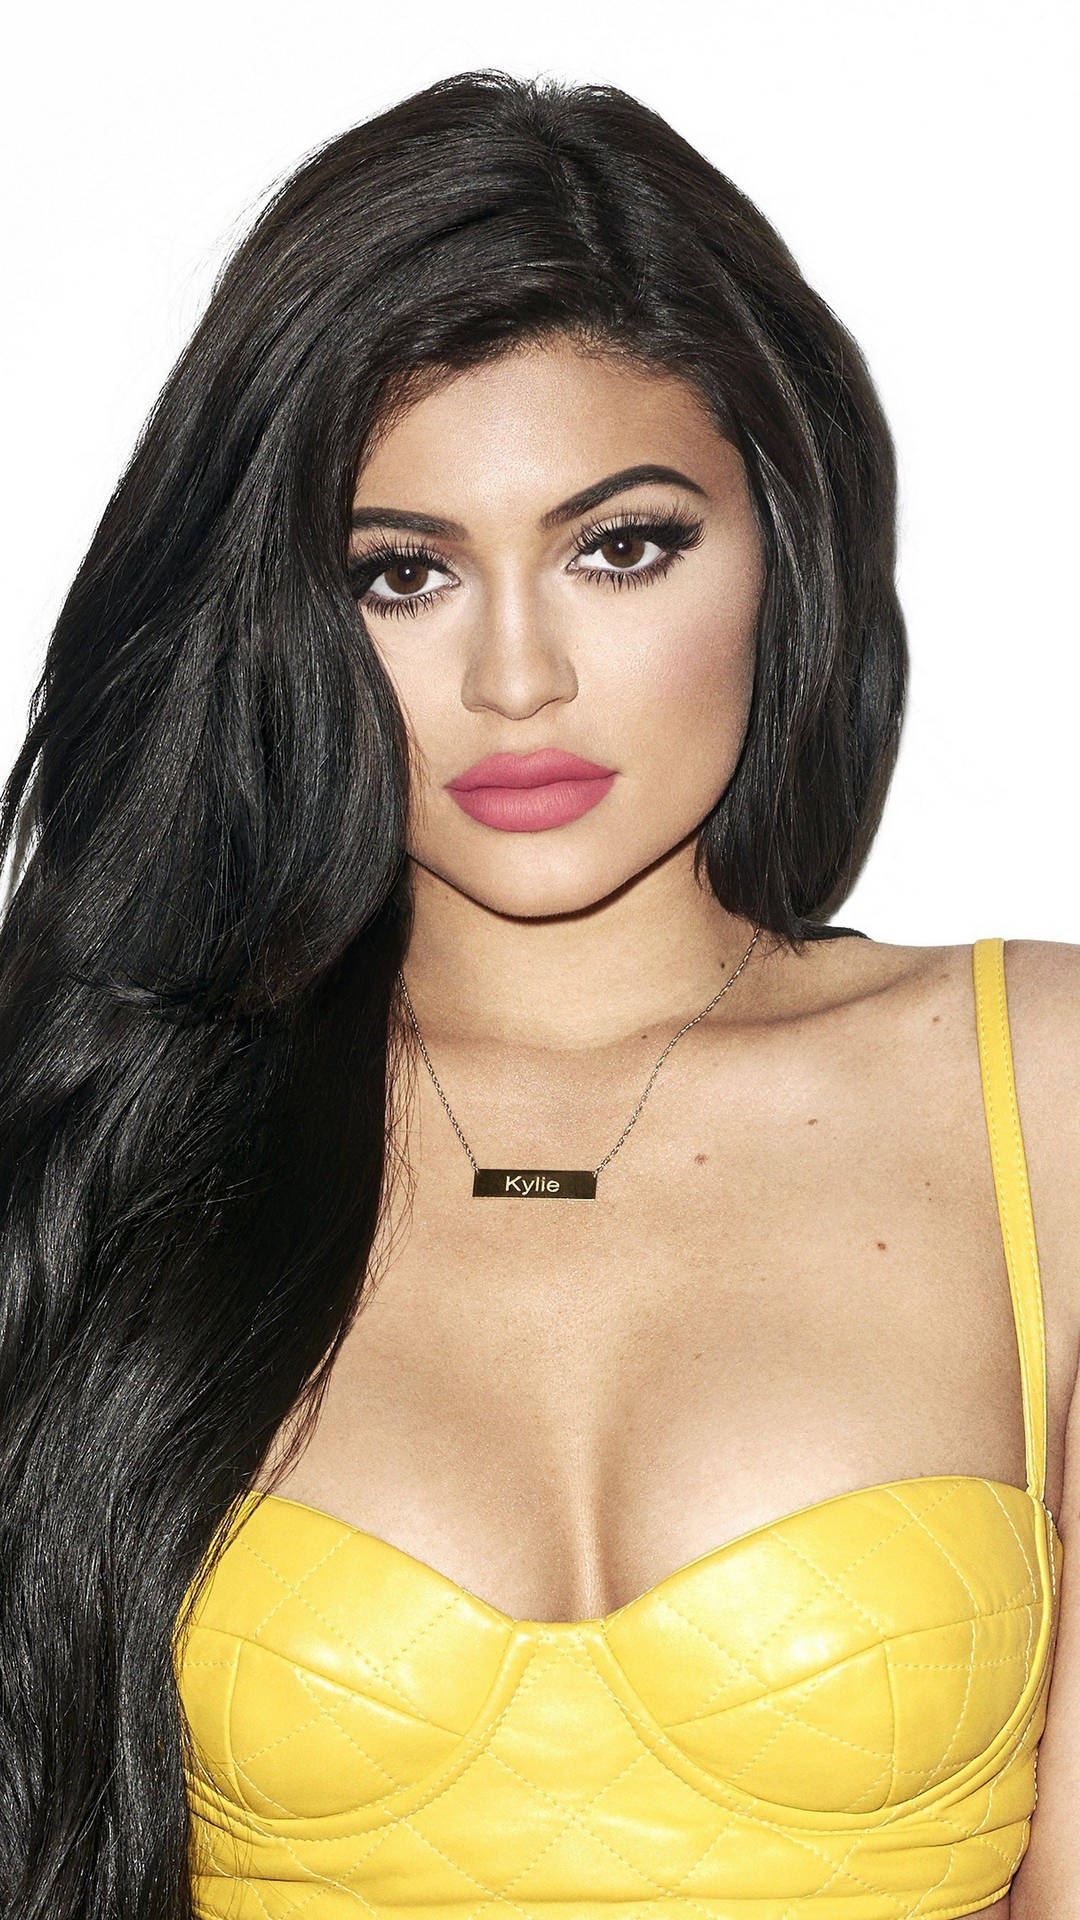 Kylie Jenner In Yellow Brassiere